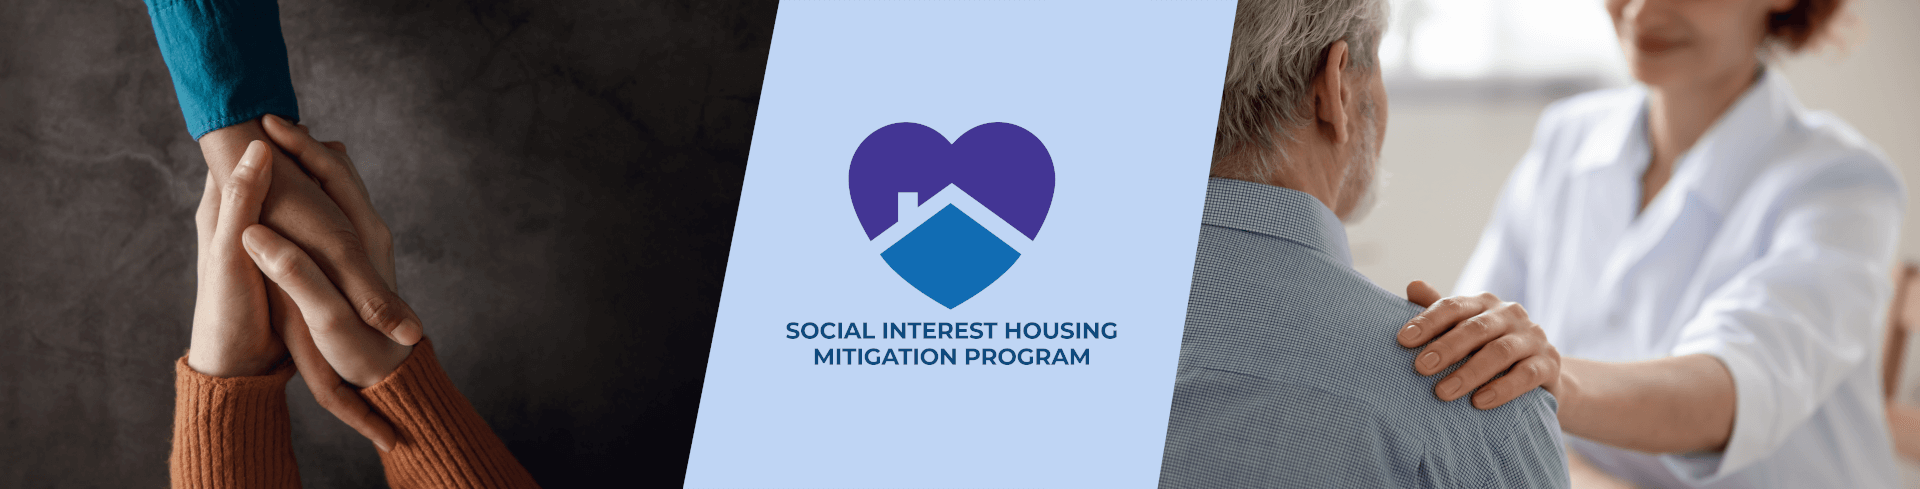 social interest housing mitigation program landing banner